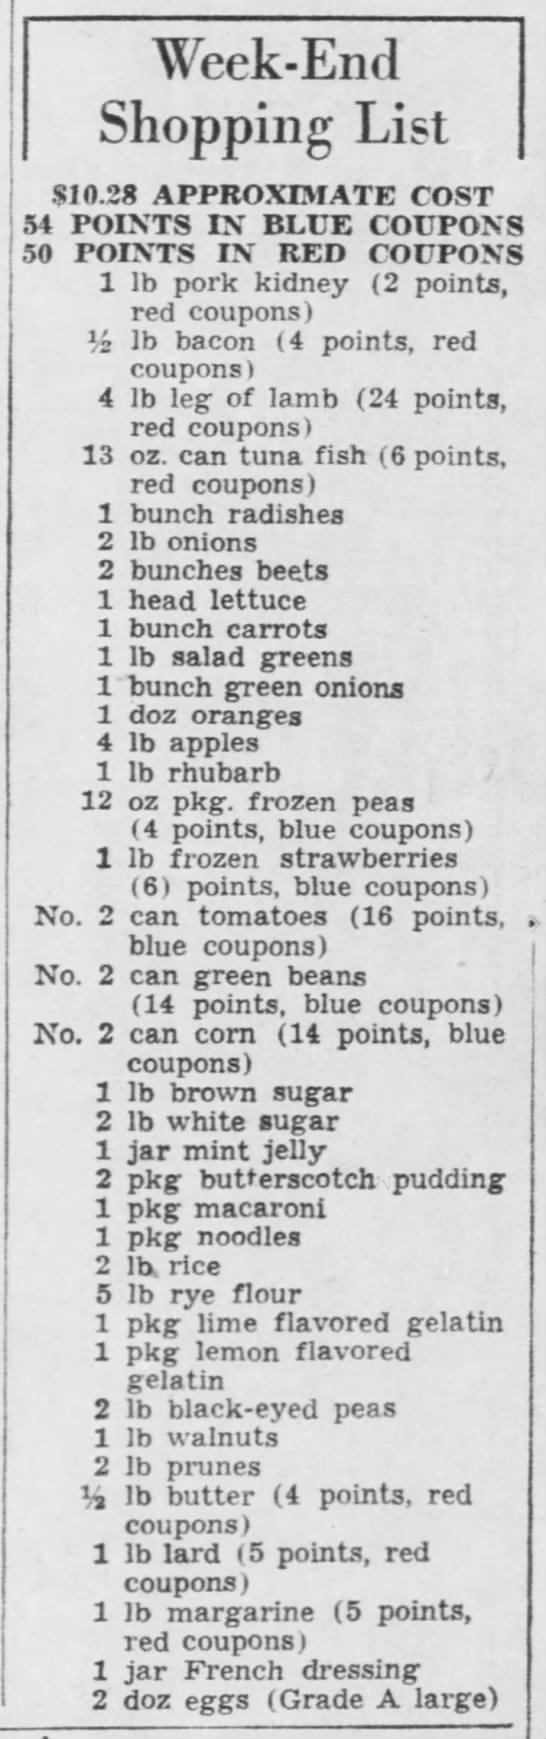 23 April 1943 Weekend Shopping List - 